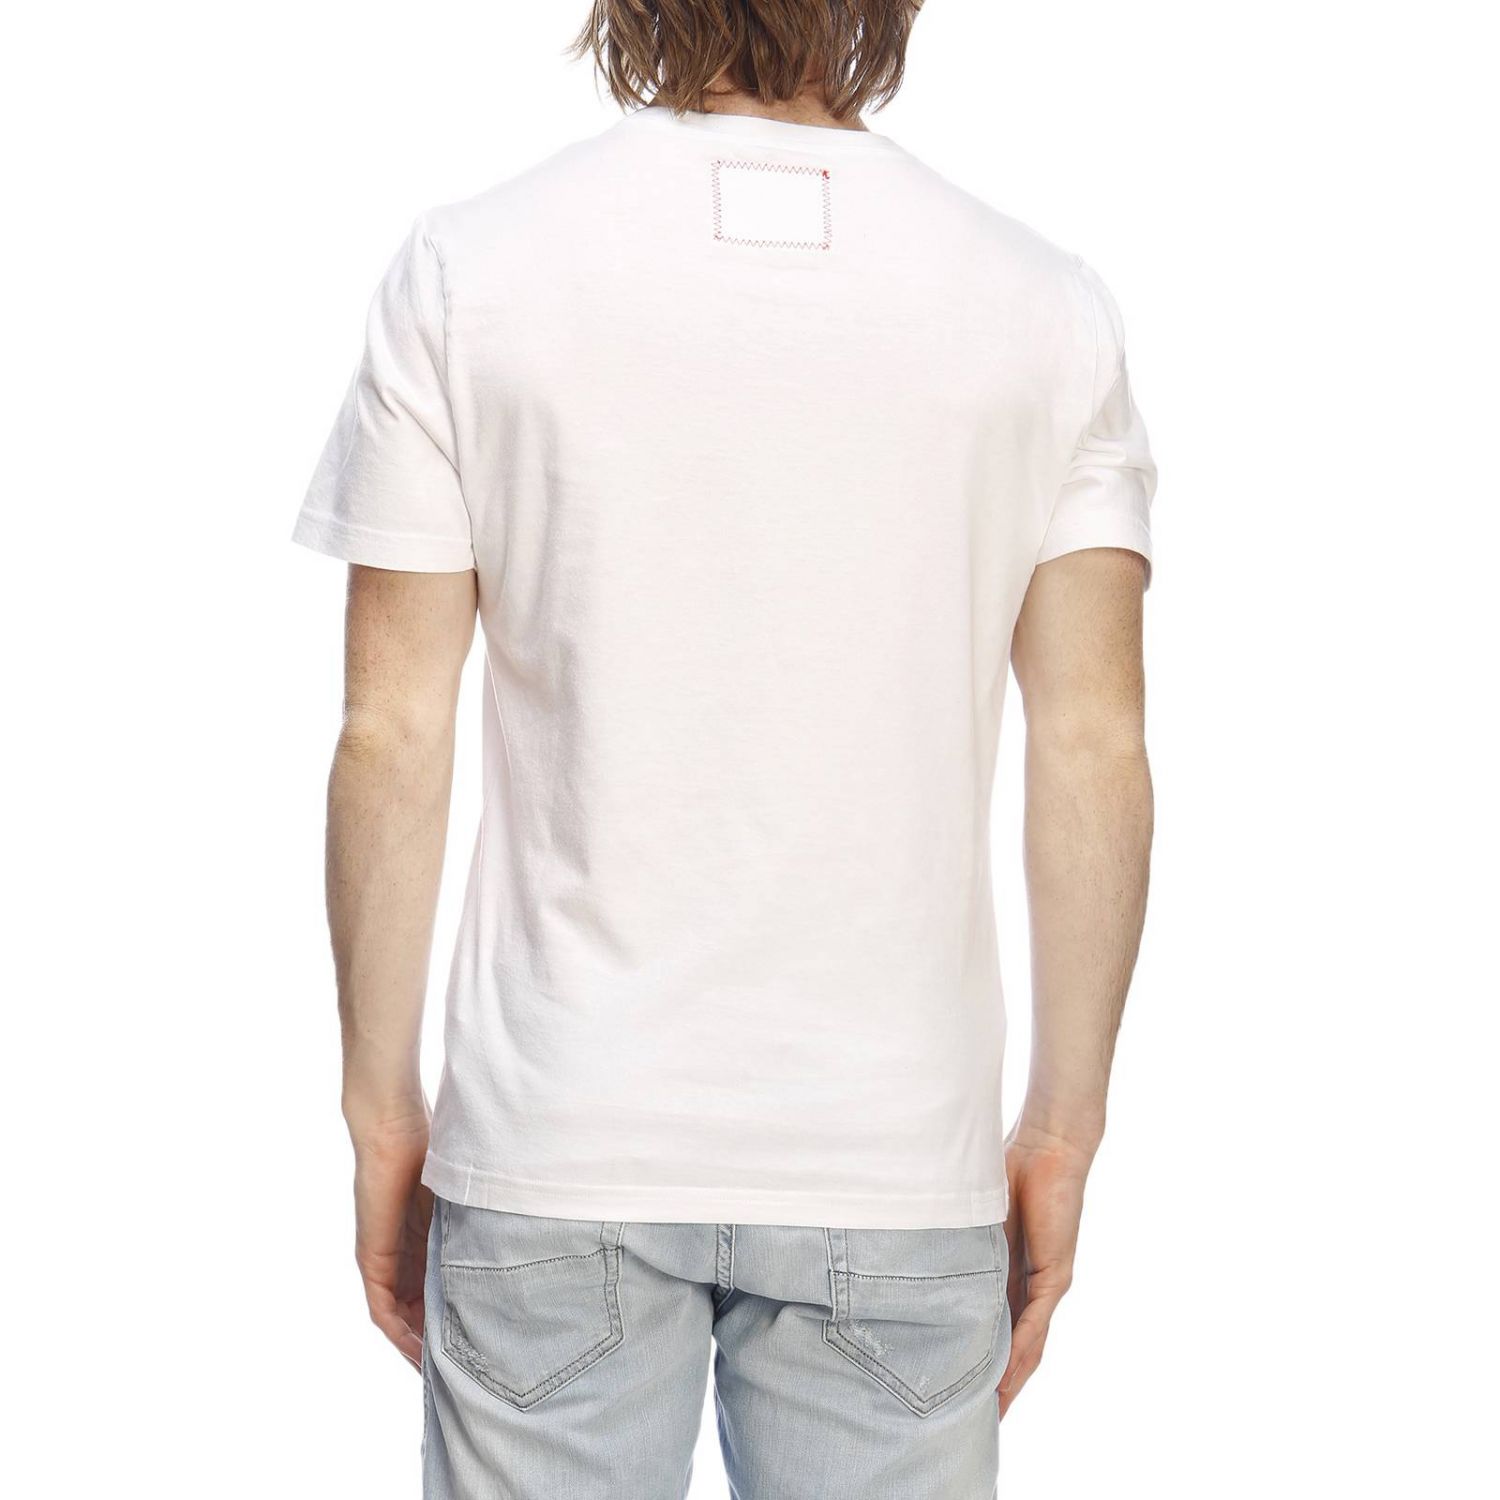 Hydrogen Outlet: T-shirt men - White | T-Shirt Hydrogen LP0118 GIGLIO.COM